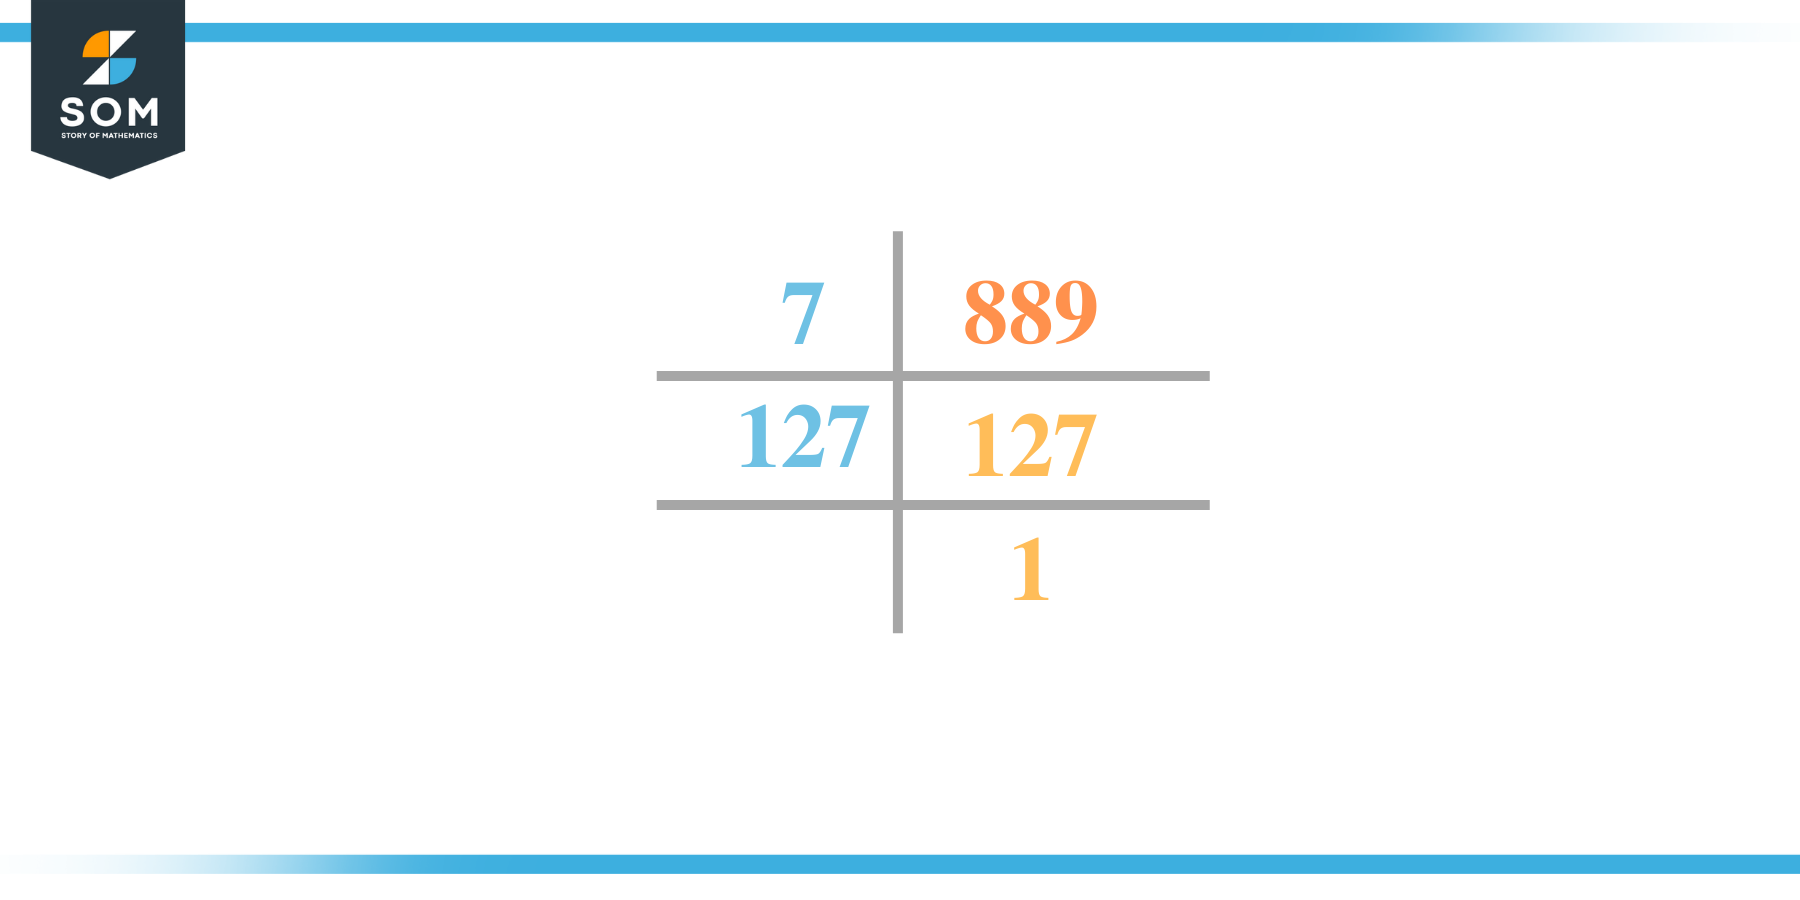 Prime factorization of 889